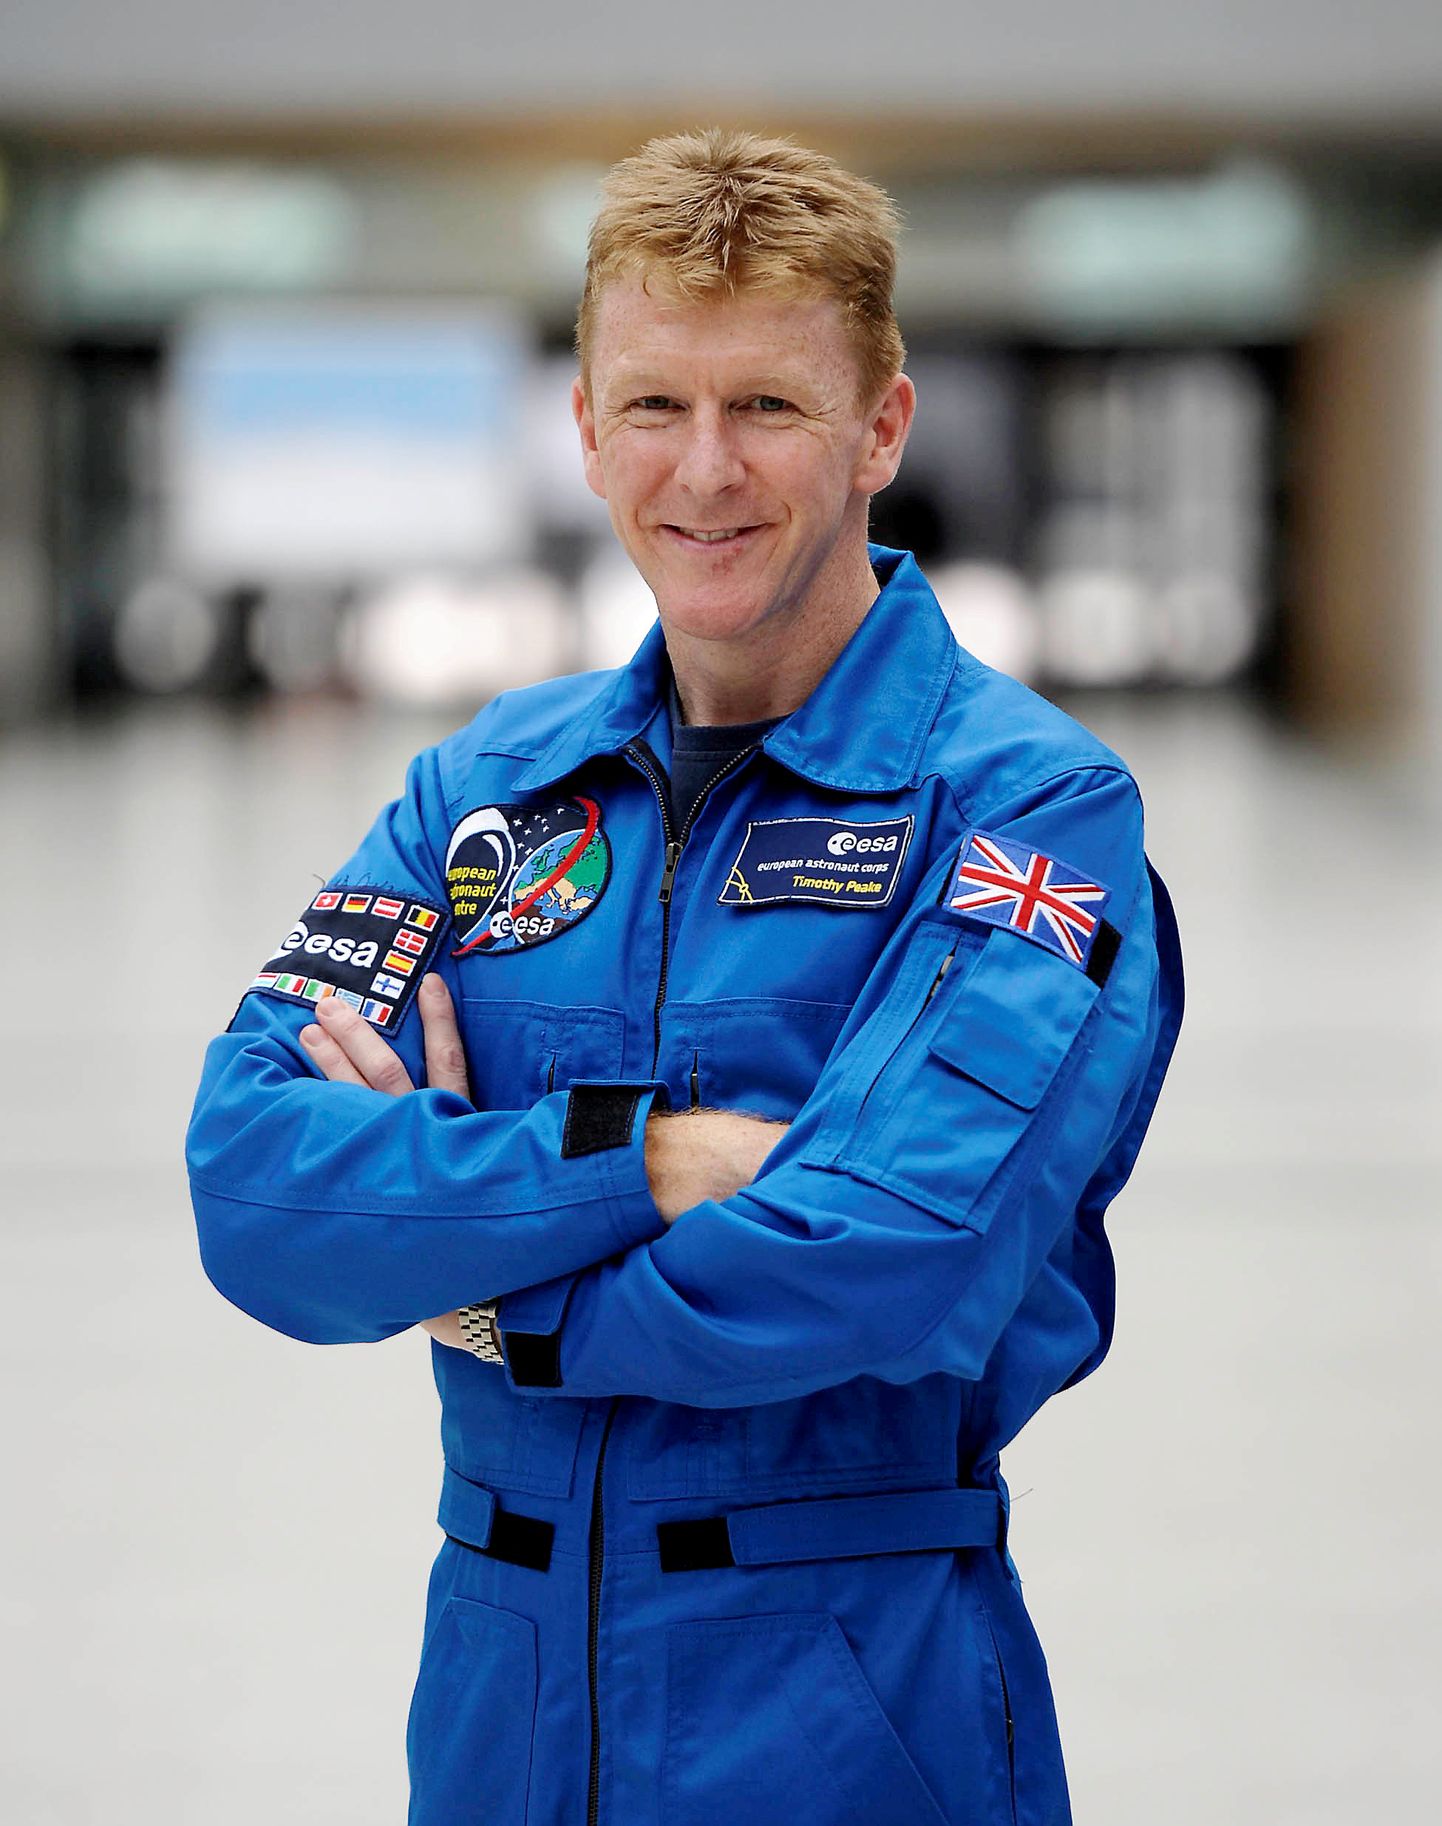 Briti astronaut Tim Peake